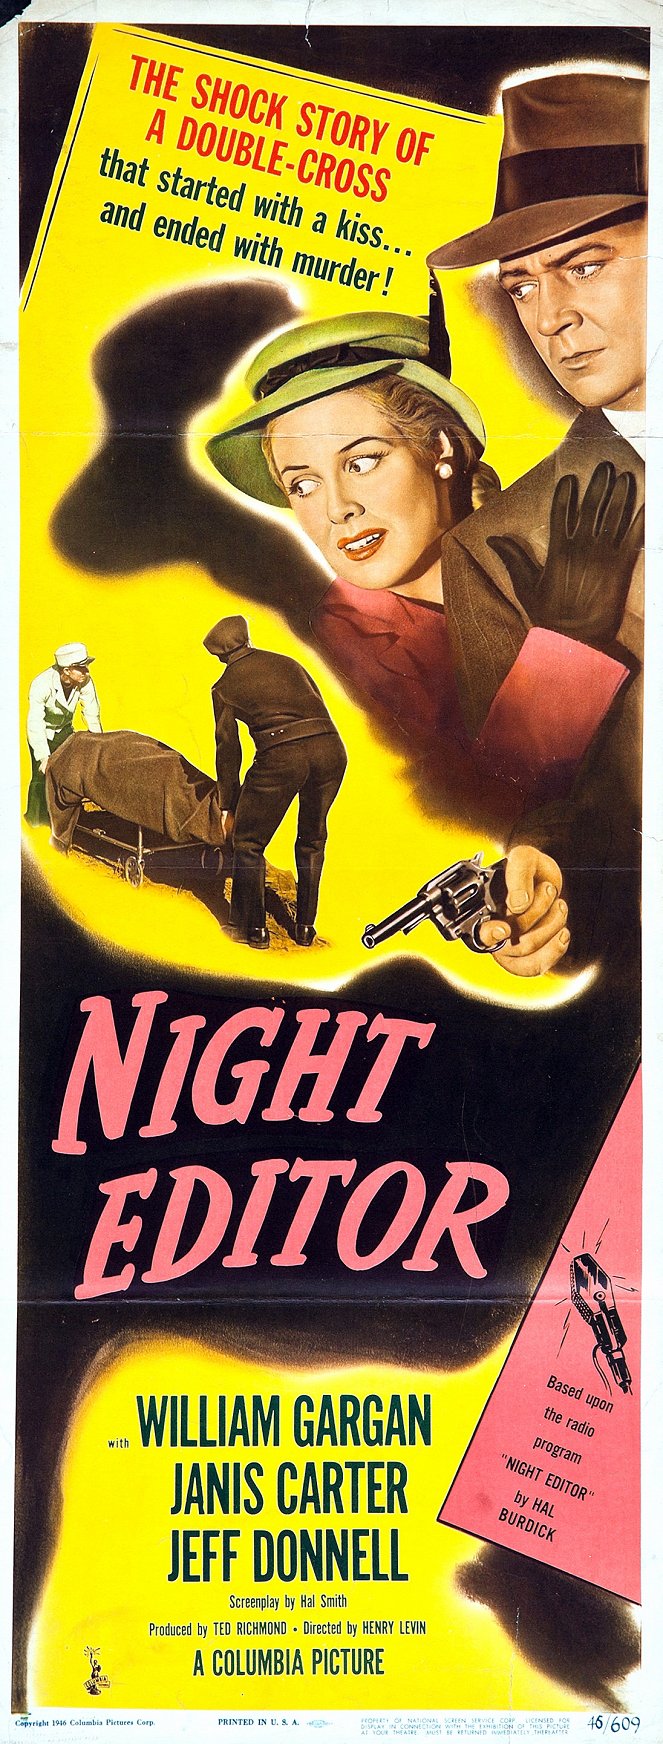 Night Editor - Posters